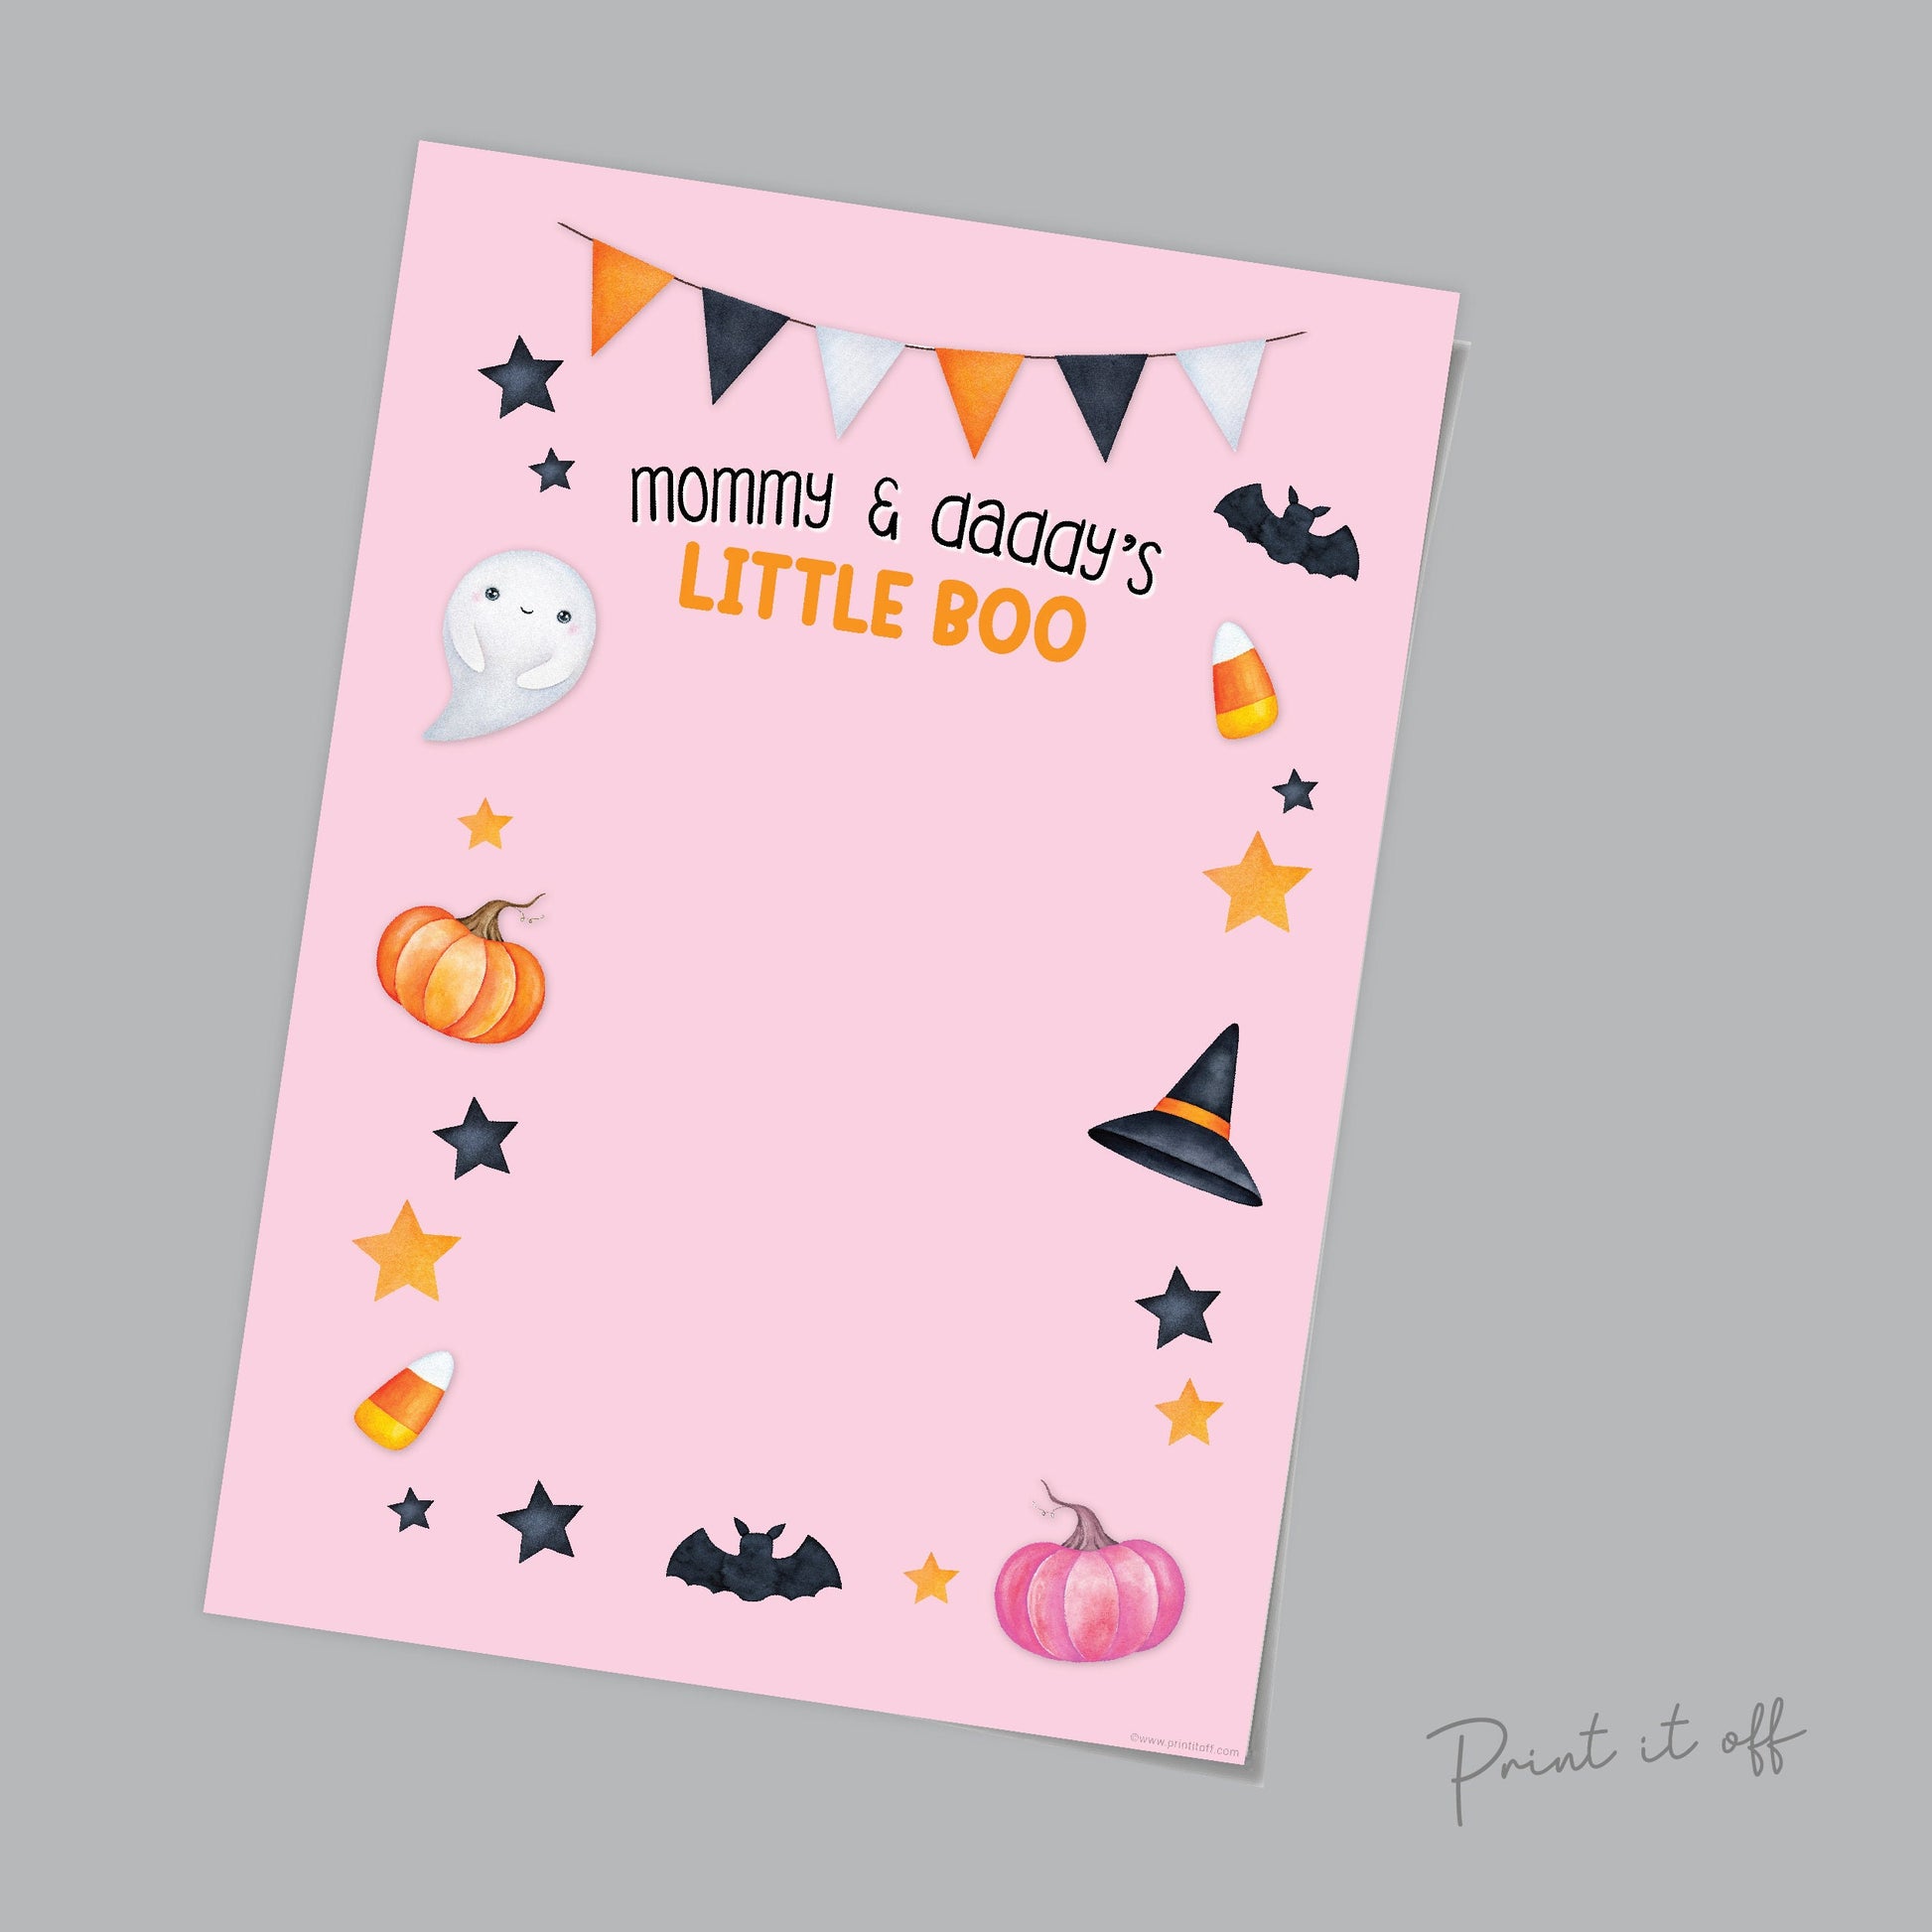 Mommy & Daddy's Little Boo Halloween Art Craft / Handprint Footprint / Ghost / Kids Baby Toddler Kids / Sign Decor Card / Print It Off 0602